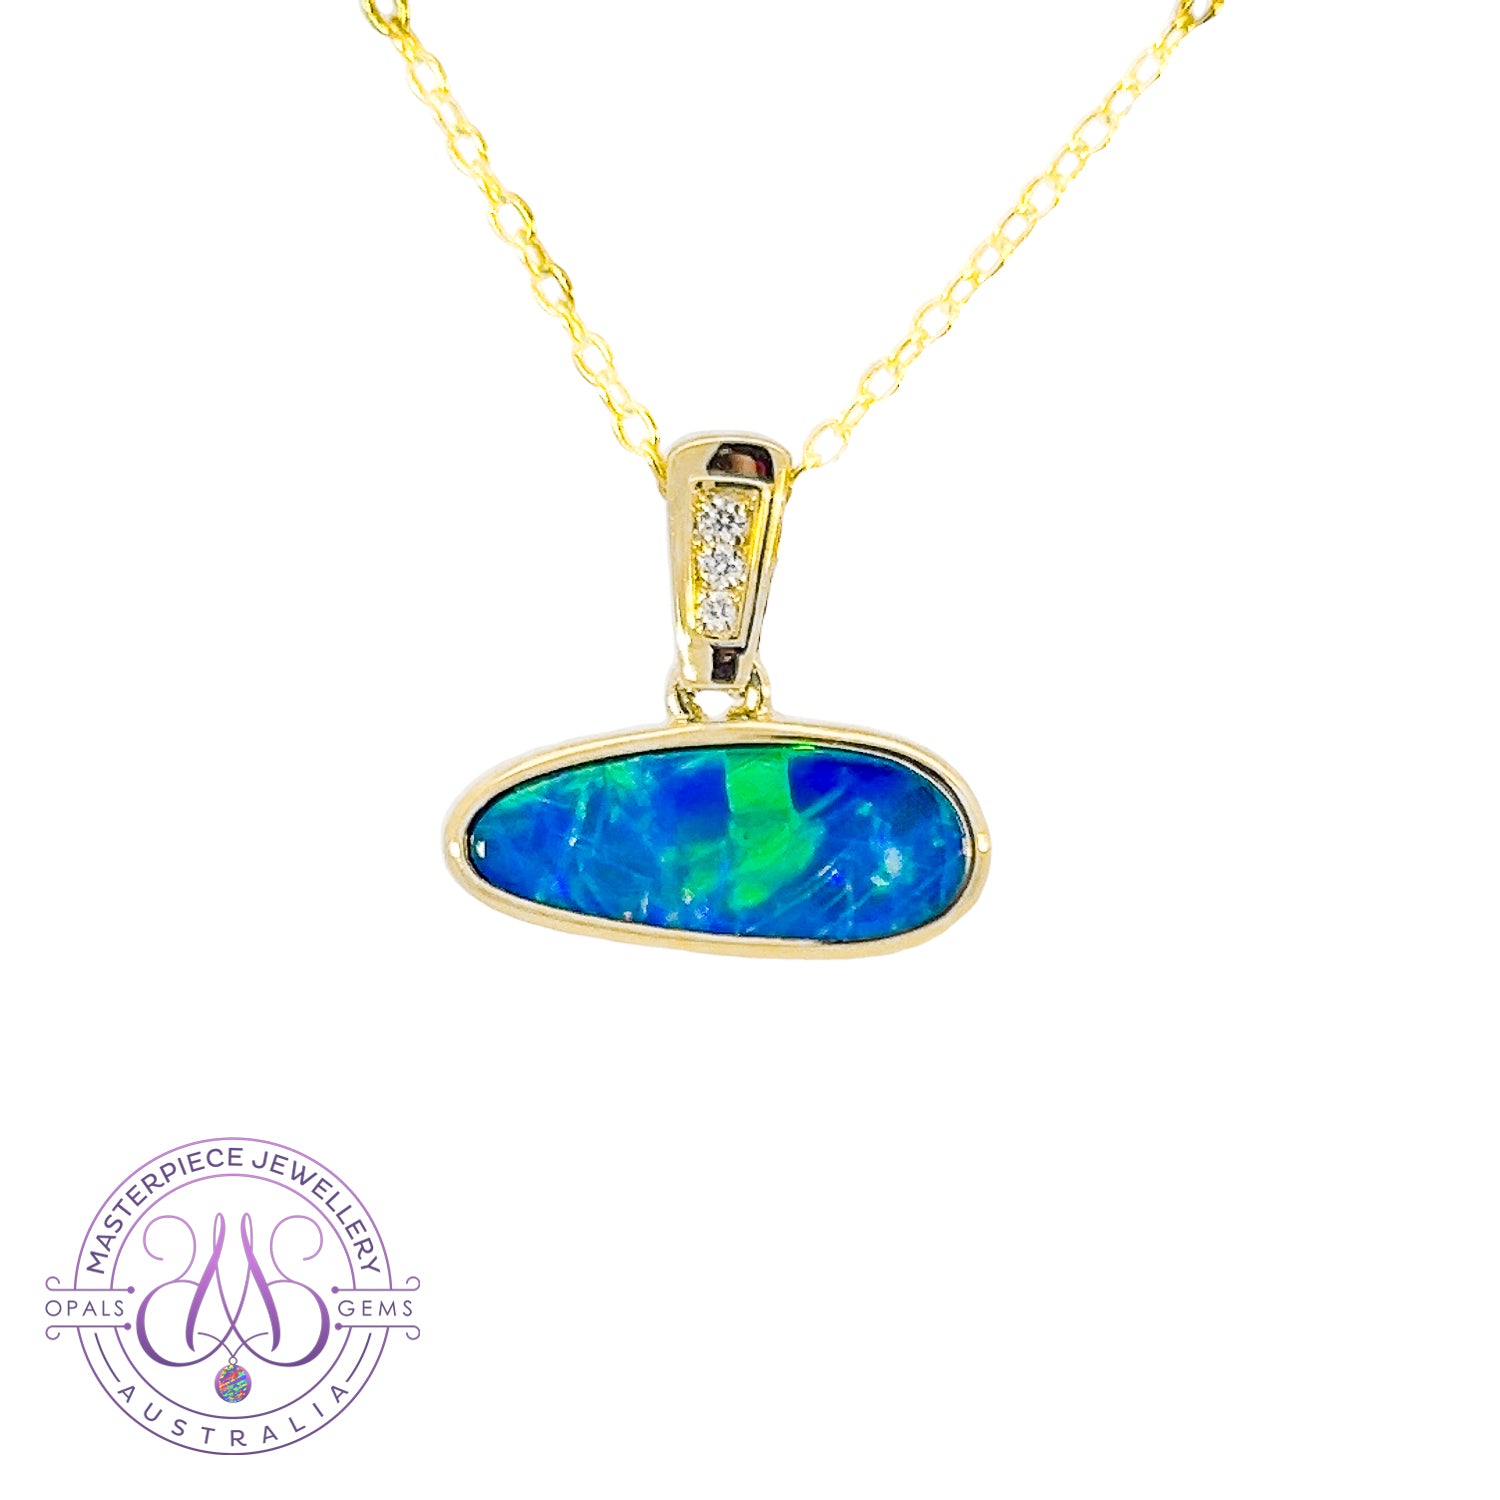 9kt Yellow Gold 0.83ct Opal doublet and diamond pendant - Masterpiece Jewellery Opal & Gems Sydney Australia | Online Shop